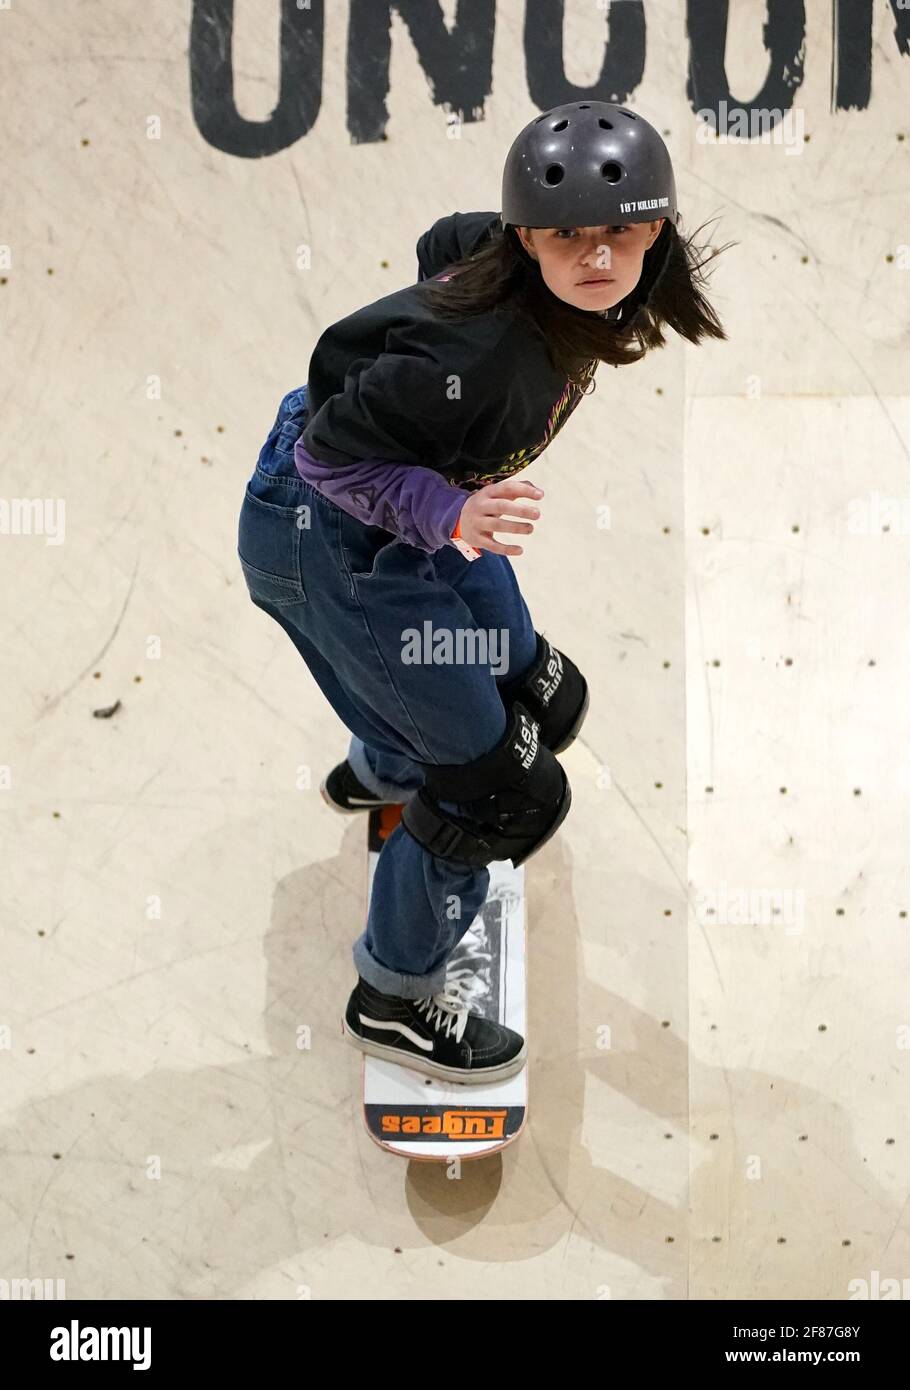 Lola Tambling in Aktion während der Skateboard GB x HABITO National Championships in Greystone Action Sports, Manchester. Bilddatum: Sonntag, 11. April 2021. Stockfoto